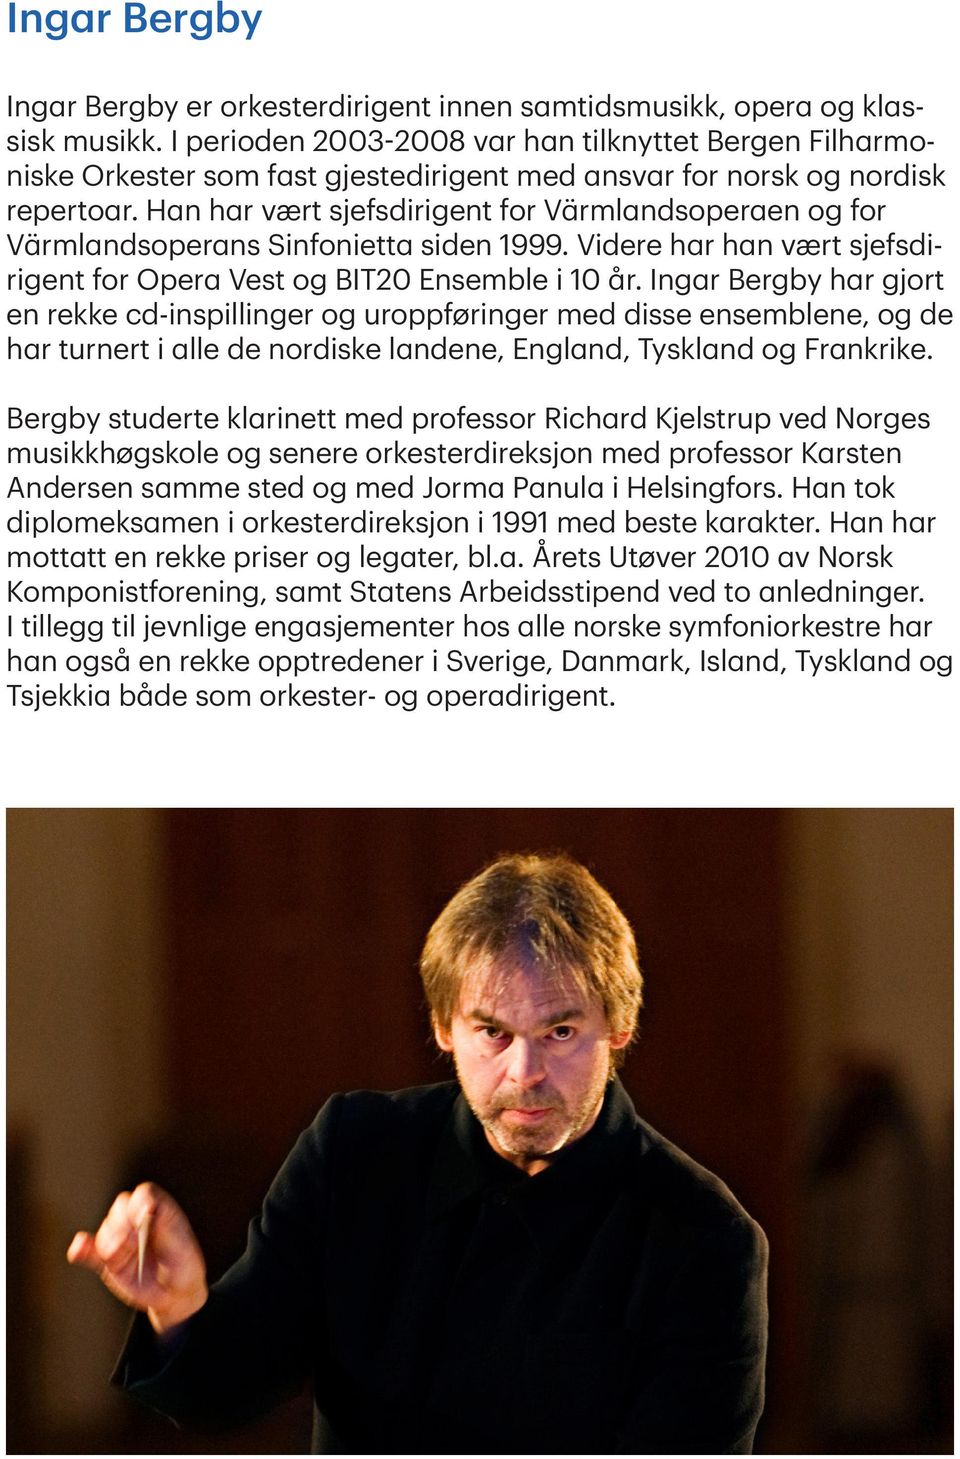 Han har vært sjefsdirigent for Värmlandsoperaen og for Värmlandsoperans Sinfonietta siden 1999. Videre har han vært sjefsdirigent for Opera Vest og BIT20 Ensemble i 10 år.